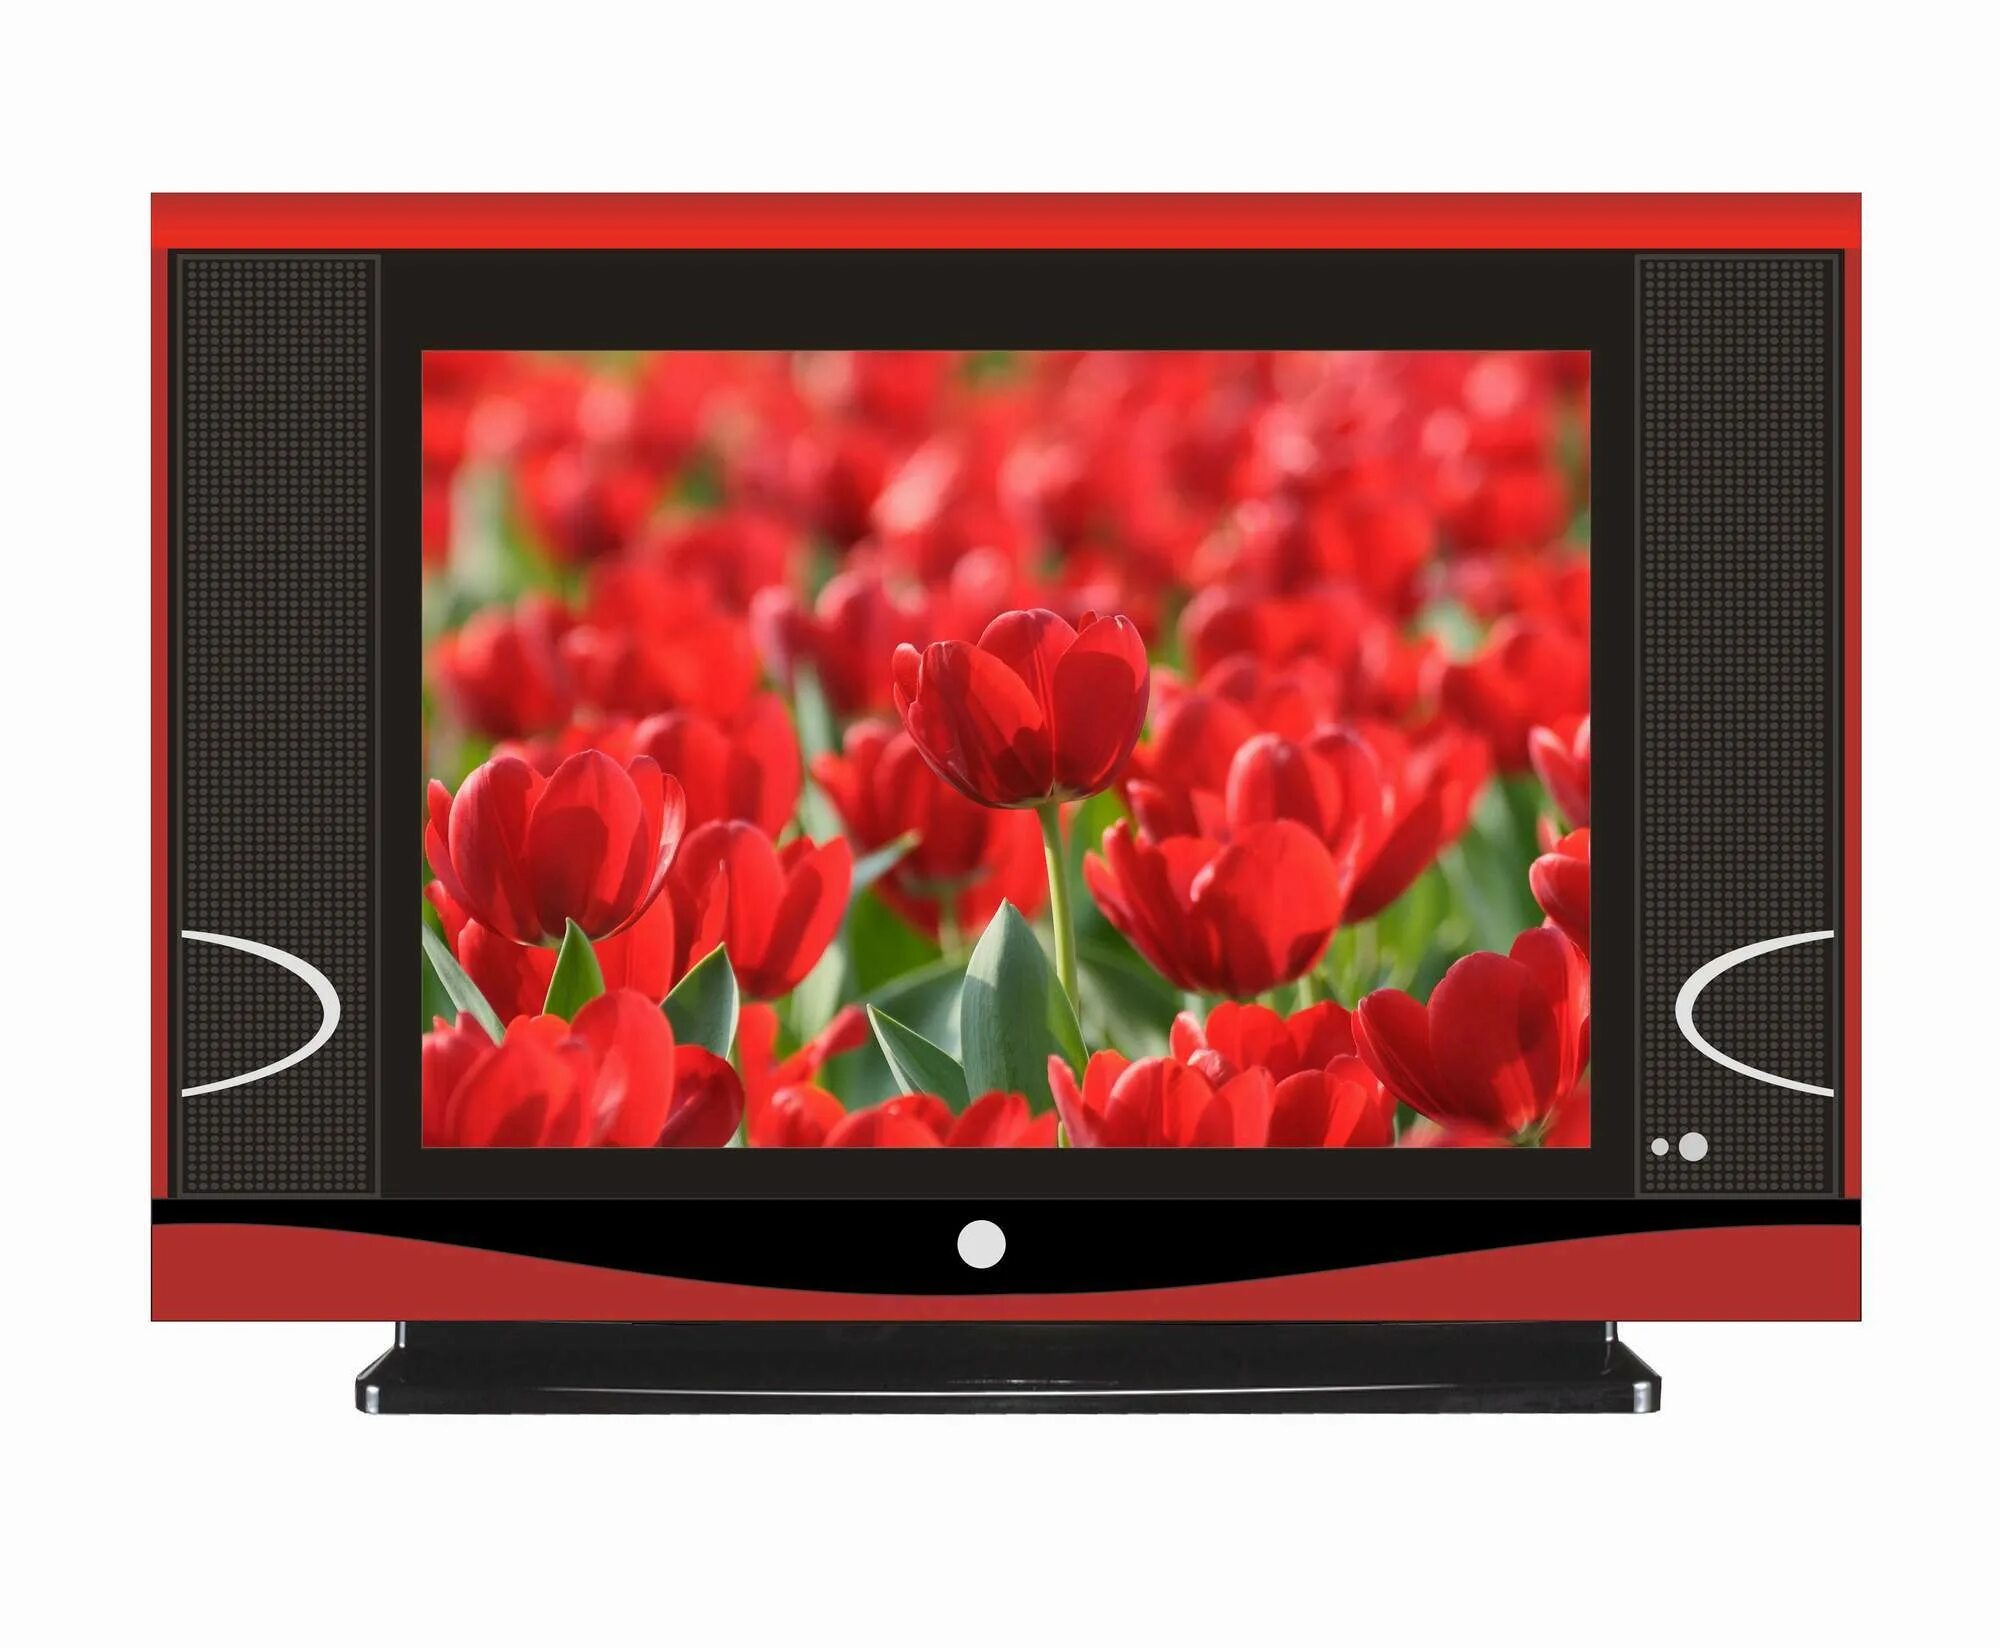 Тв красная на сегодня. CRT телевизор Shivaki 14 дюймов. Shivaki 14 inch Color Television VT-14мкiiтелевизор. Красный телевизор. Телевизор в Цветном корпусе.